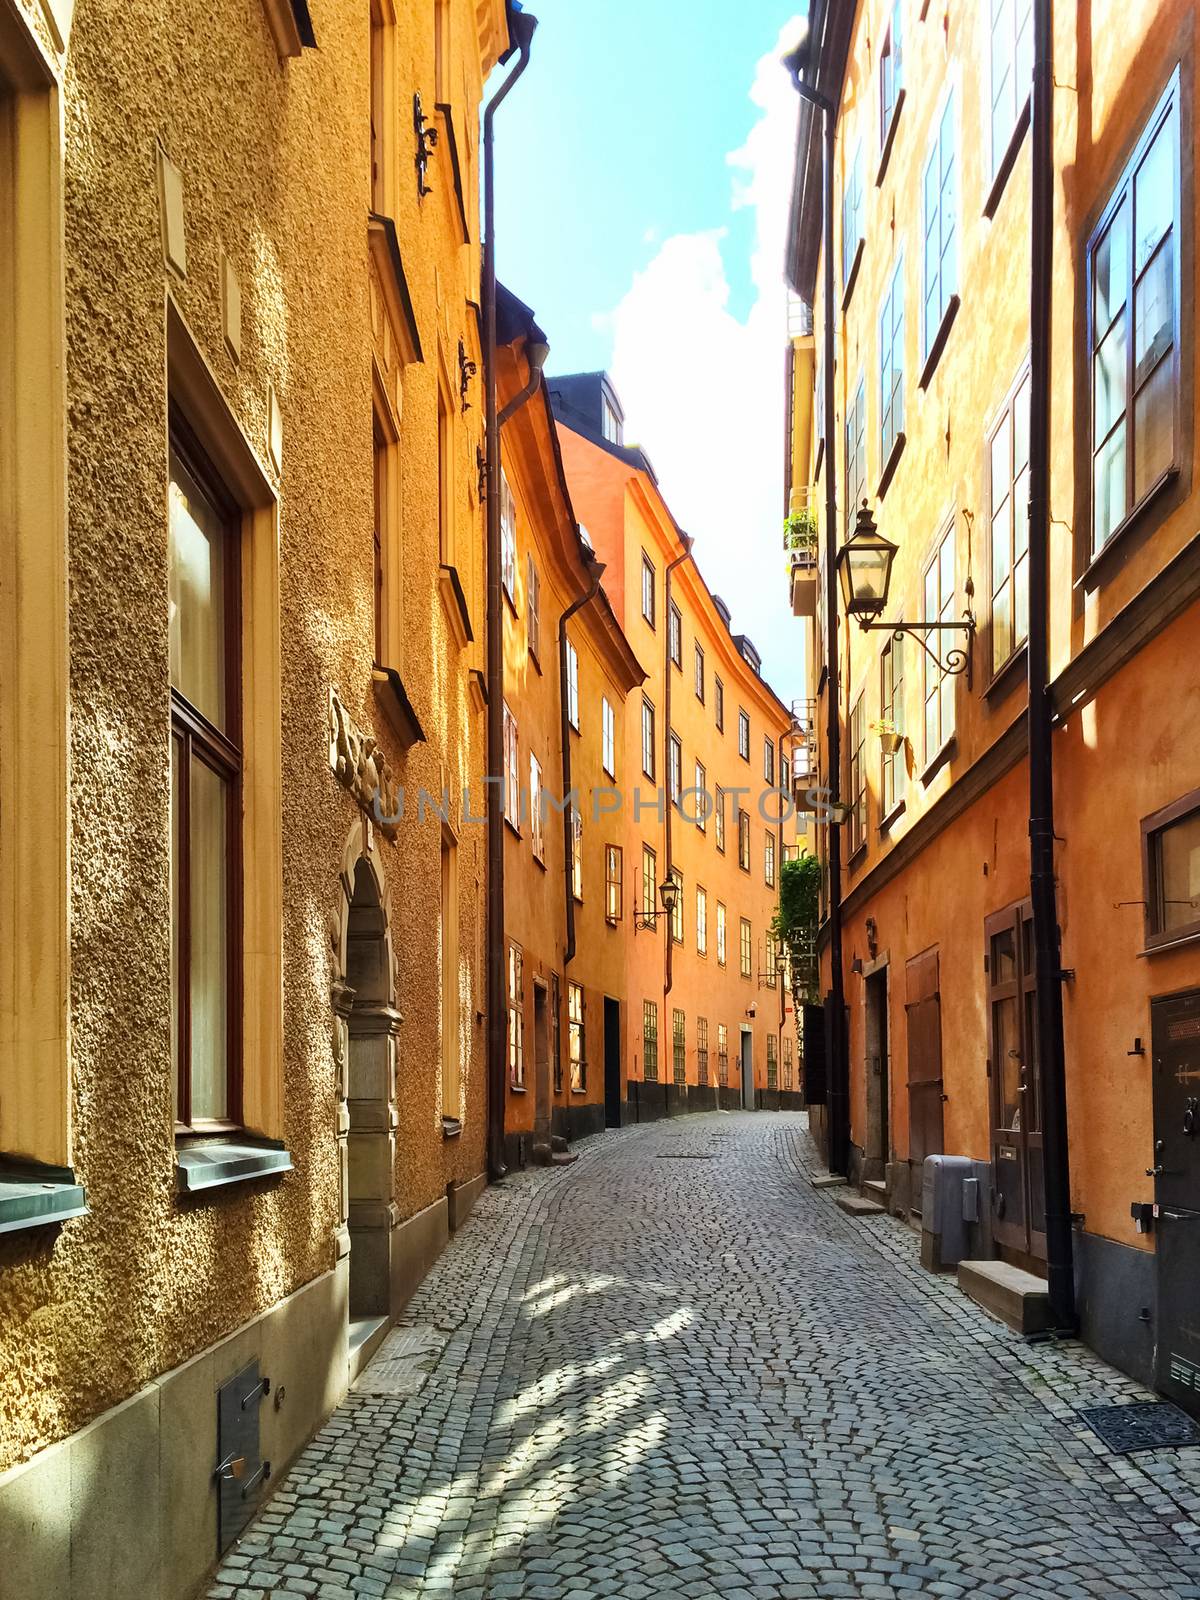 Sunny street in Gamla Stan, historic center of Stockholm.